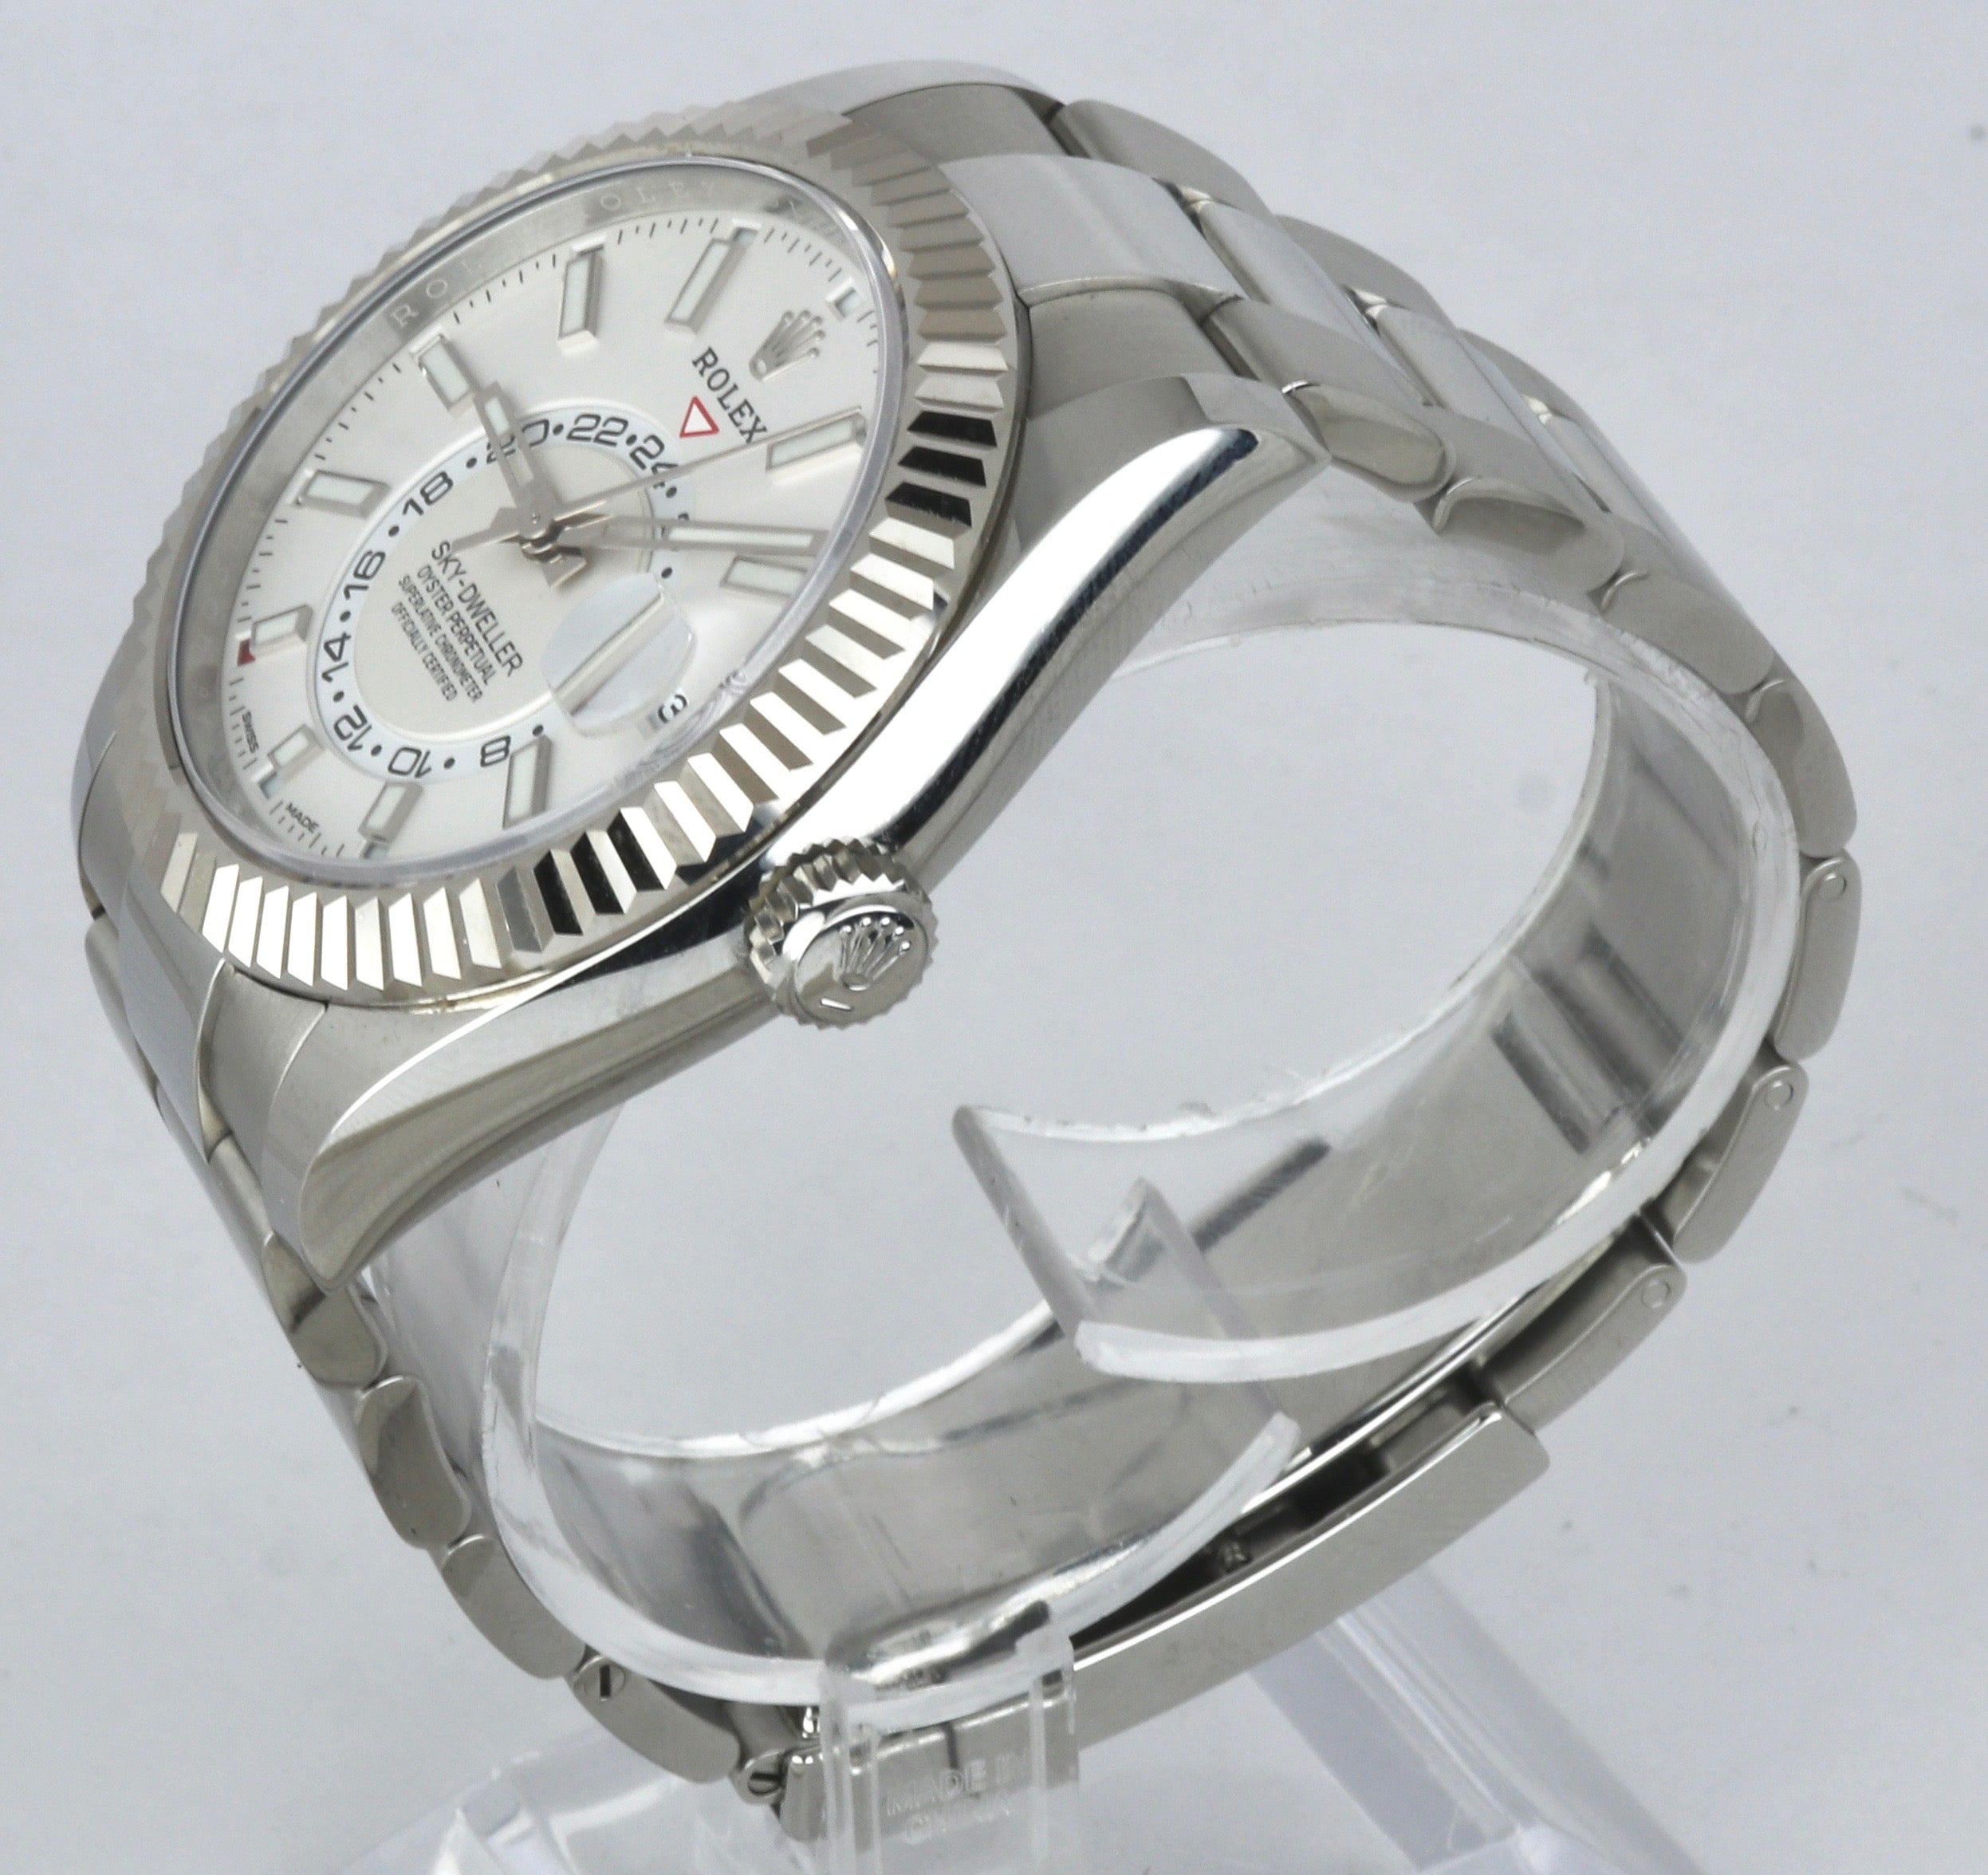 DEC 2019 Rolex Sky-Dweller Stainless 18K White Gold Silver 326934 42mm Watch